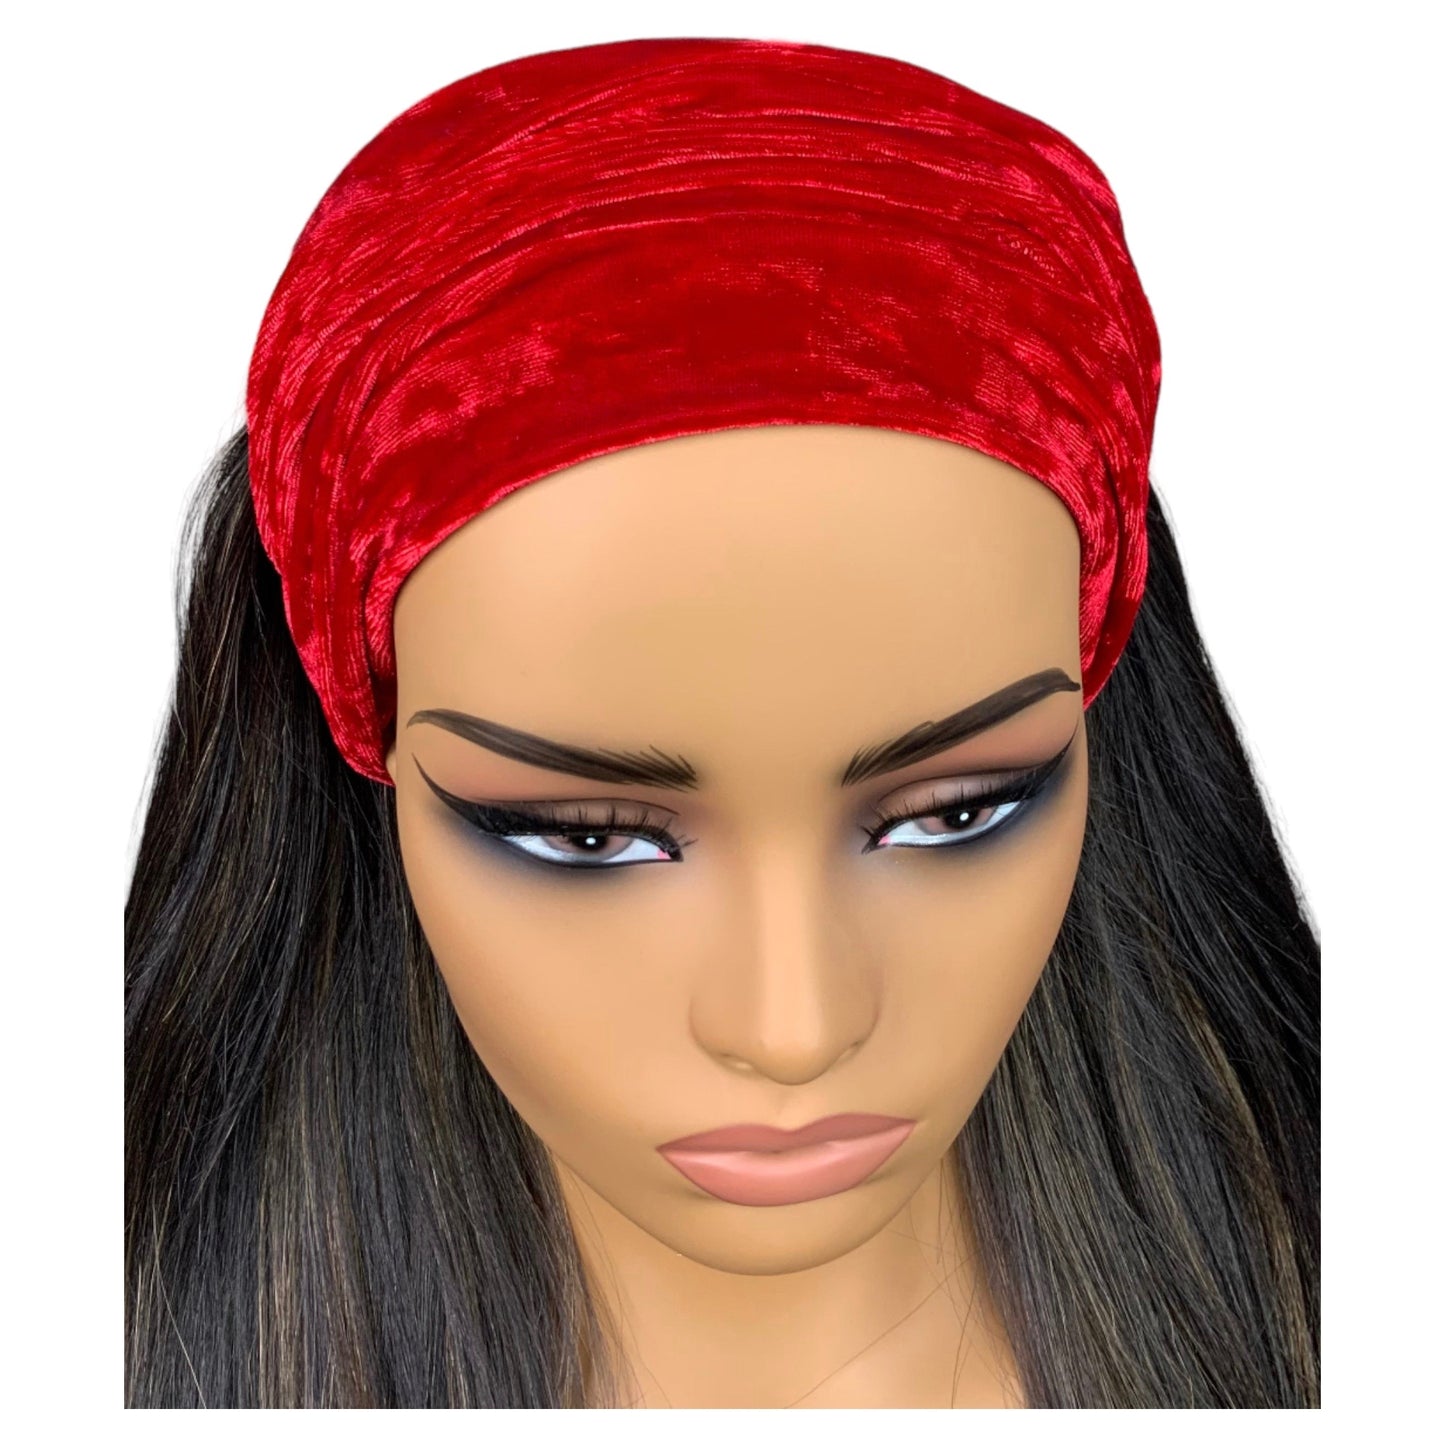 Red Crushed Velvet Wide Scrunch Headband